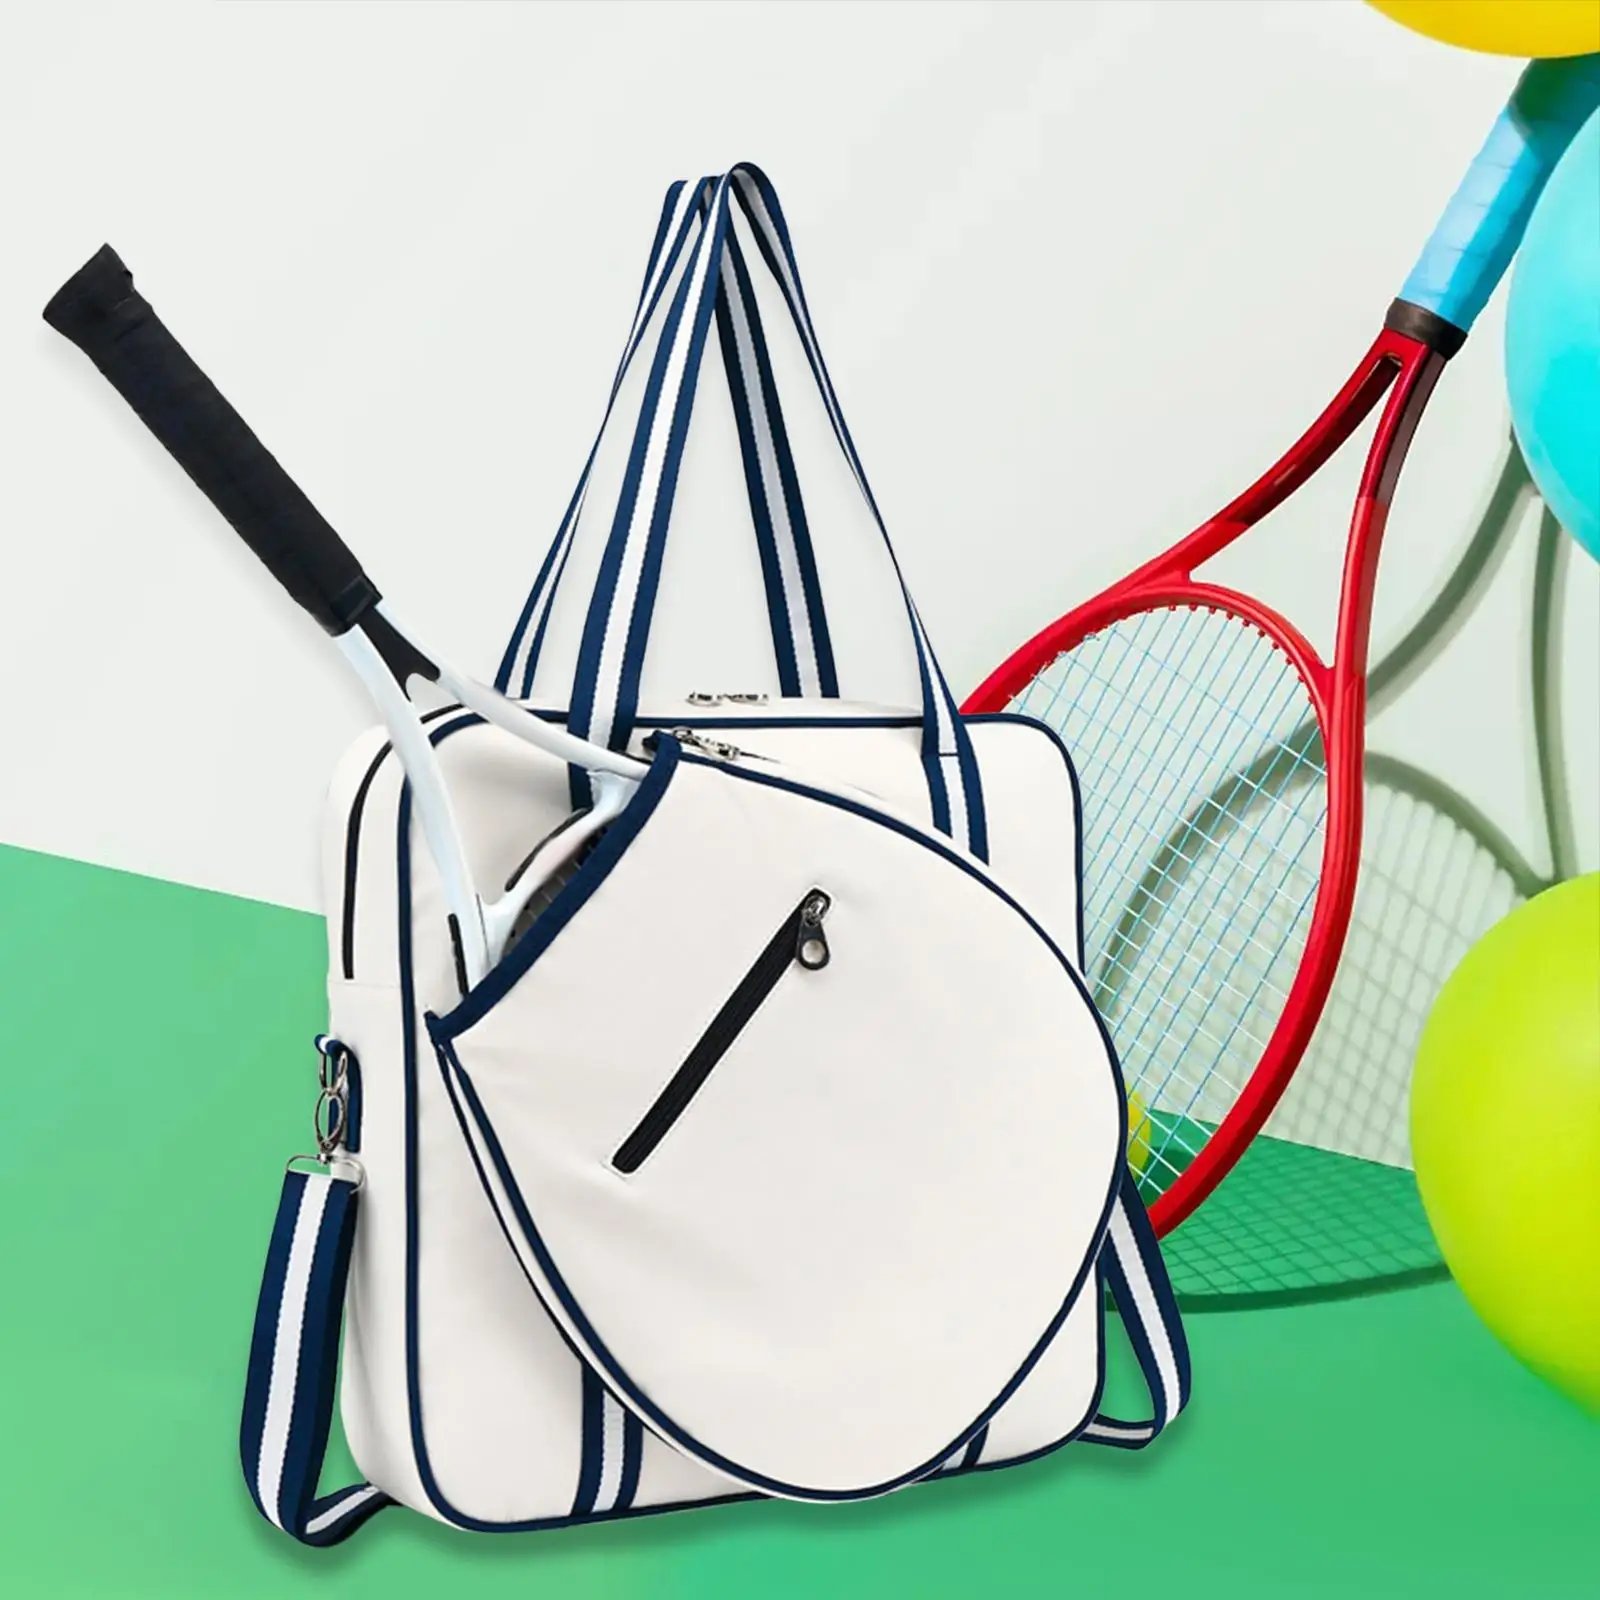 Tennis Racket Shoulder Bag with Front Tote Bag 15x4x15inch for Outdoor Activities